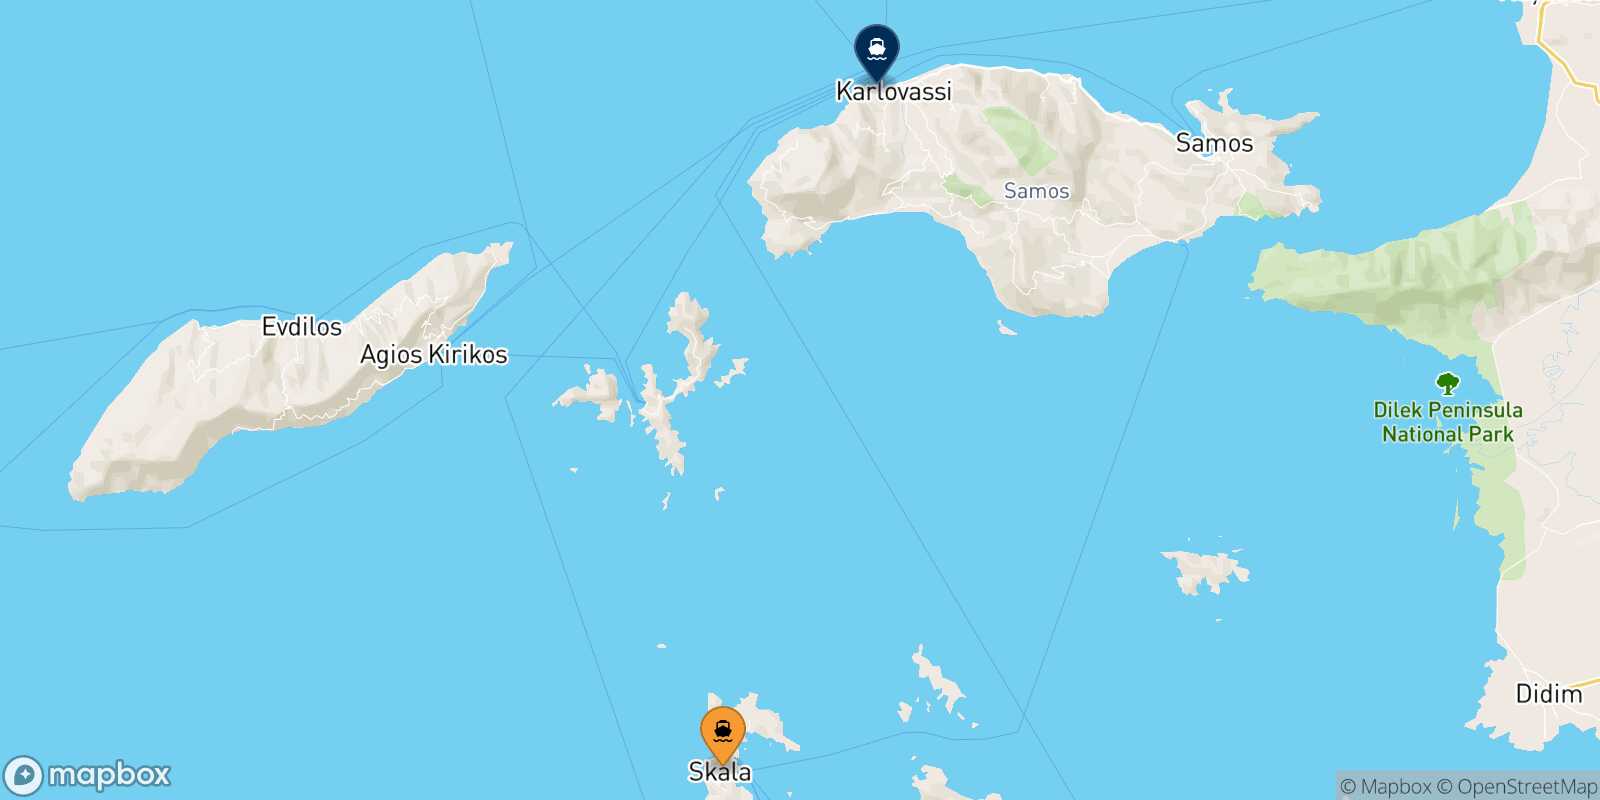 Carte des traverséesPatmos Karlovassi (Samos)